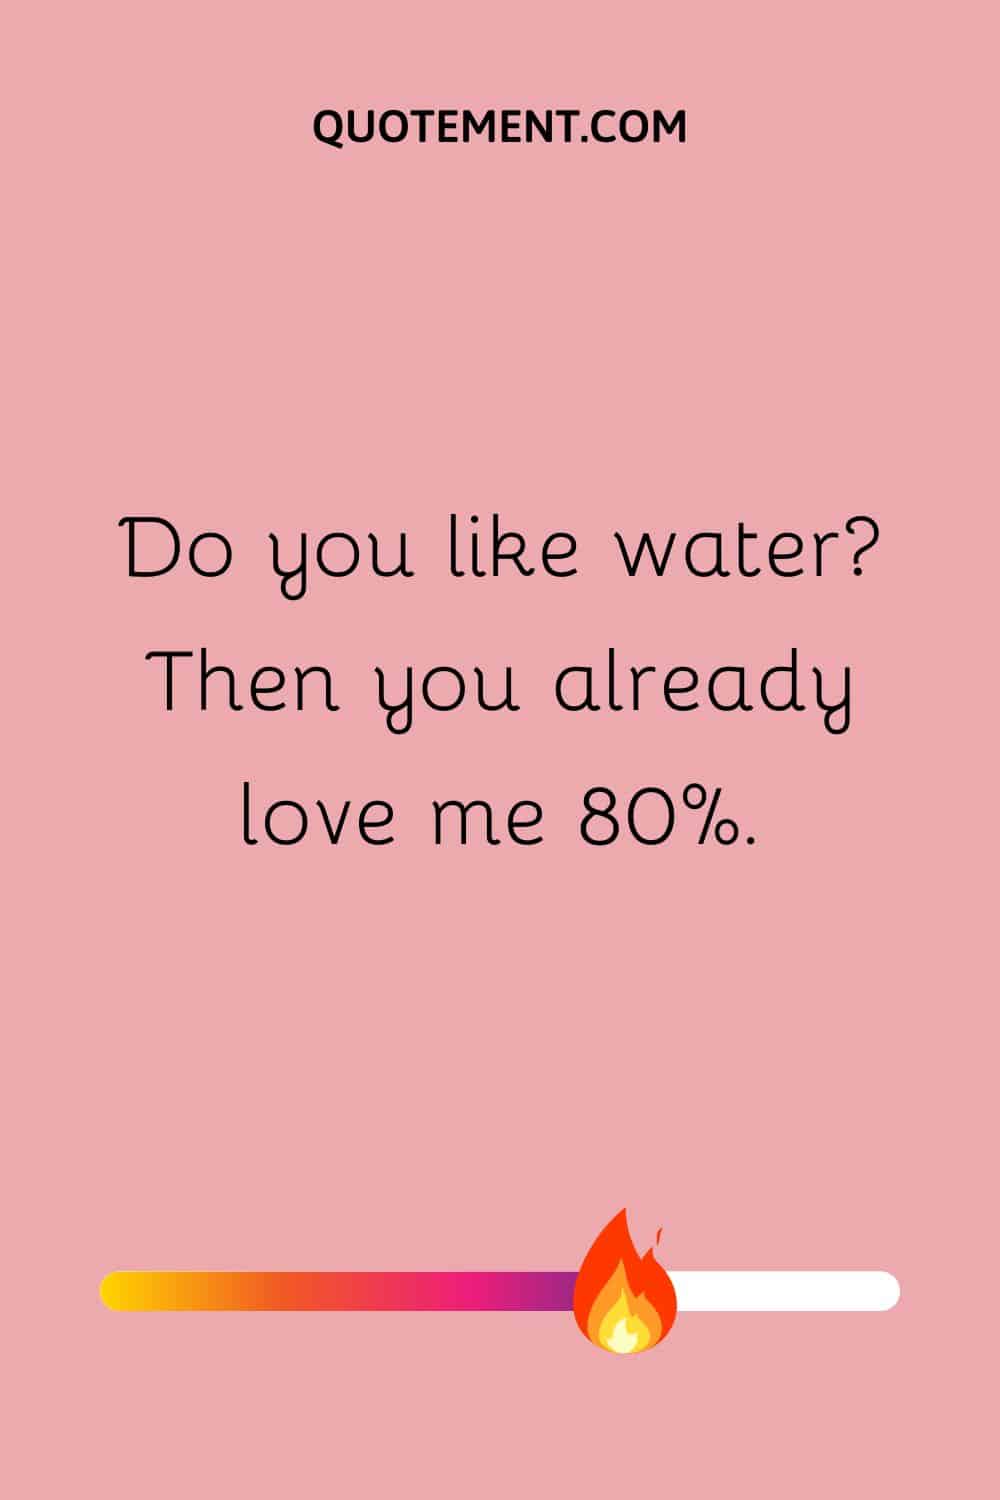 Then you already love me 80%